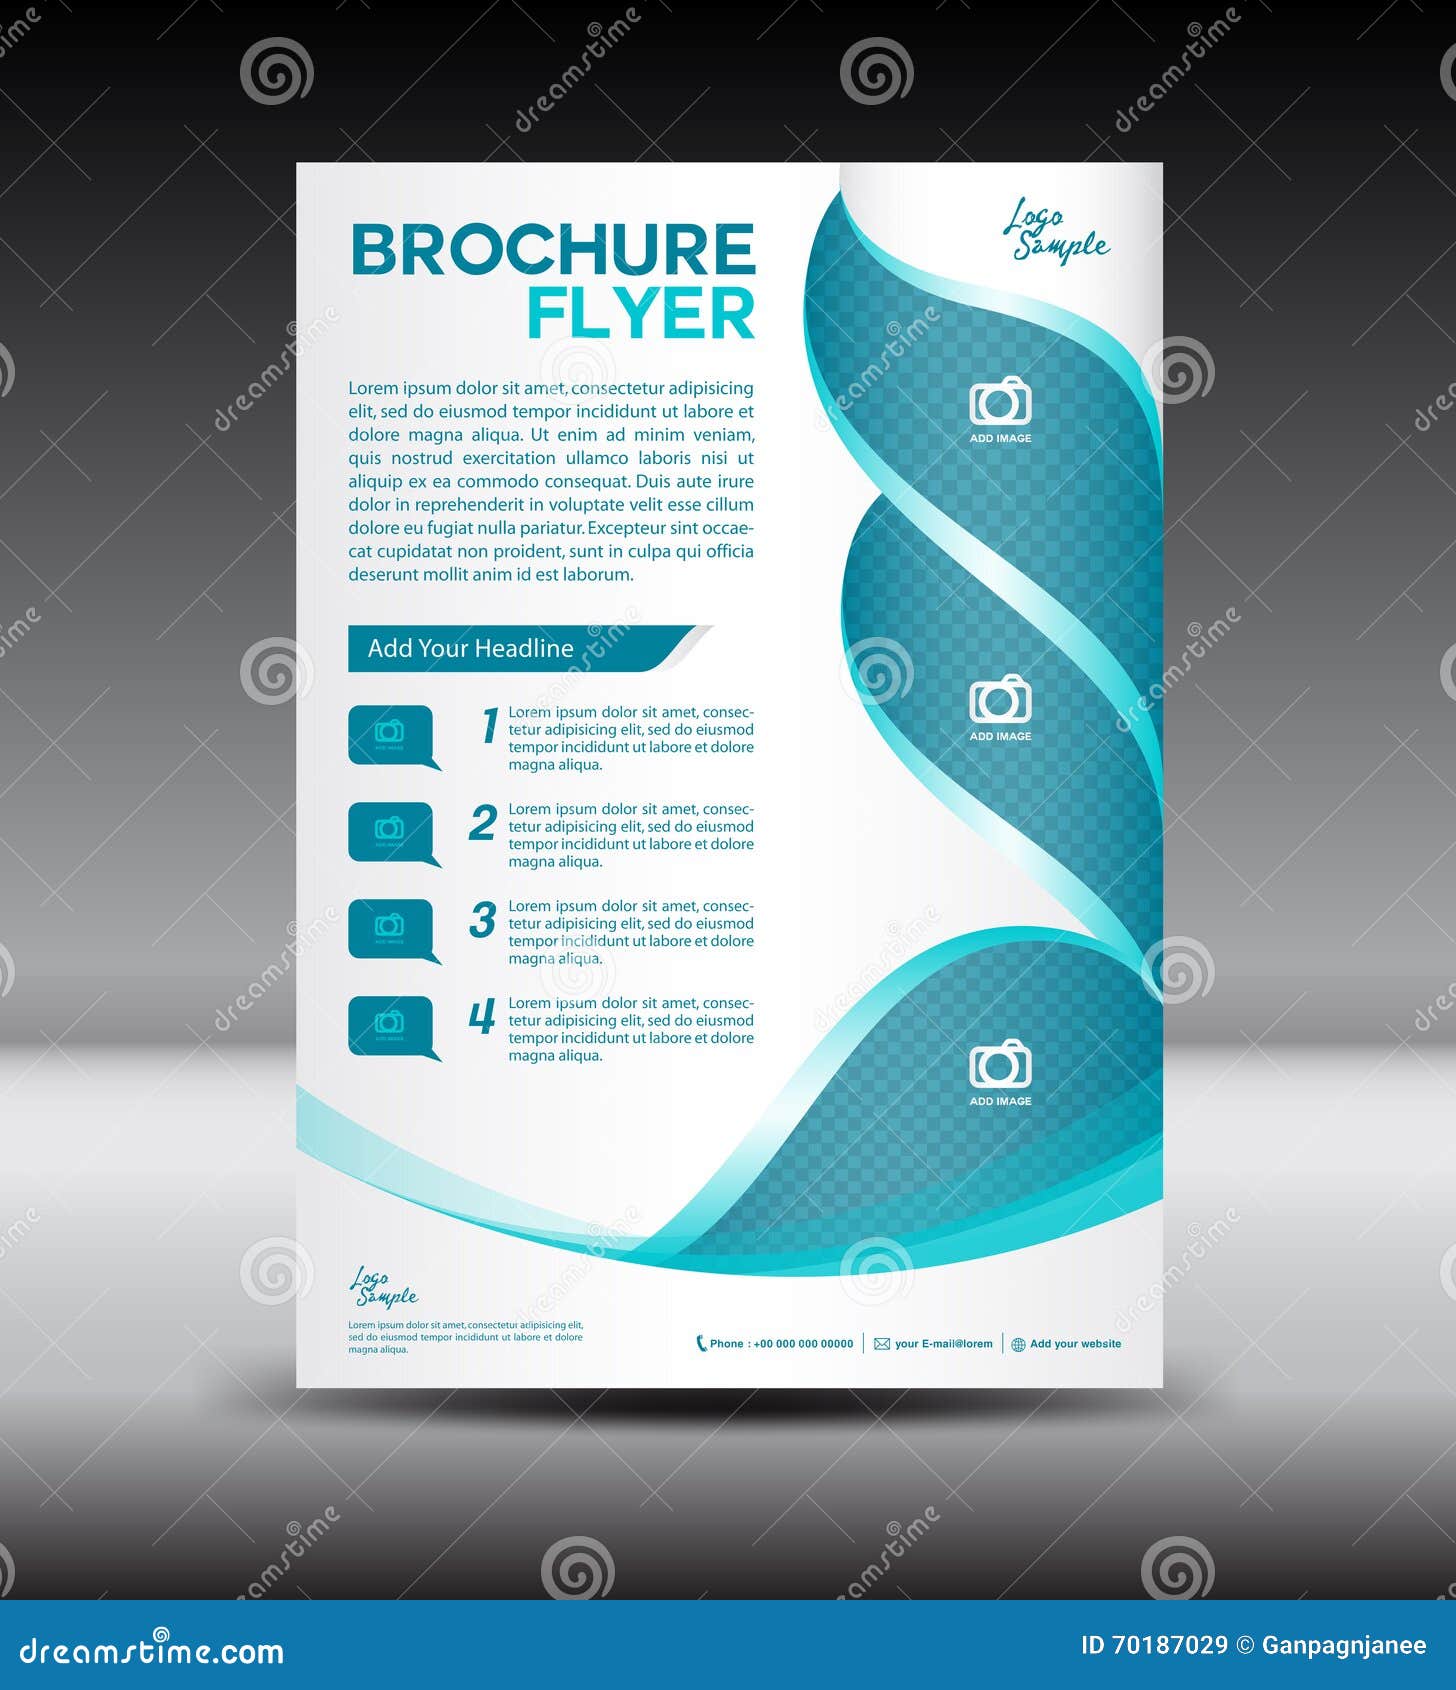 Blue And White Brochure Flyer Template Newsletter Design Stock Vector Illustration Of Annual Marketing